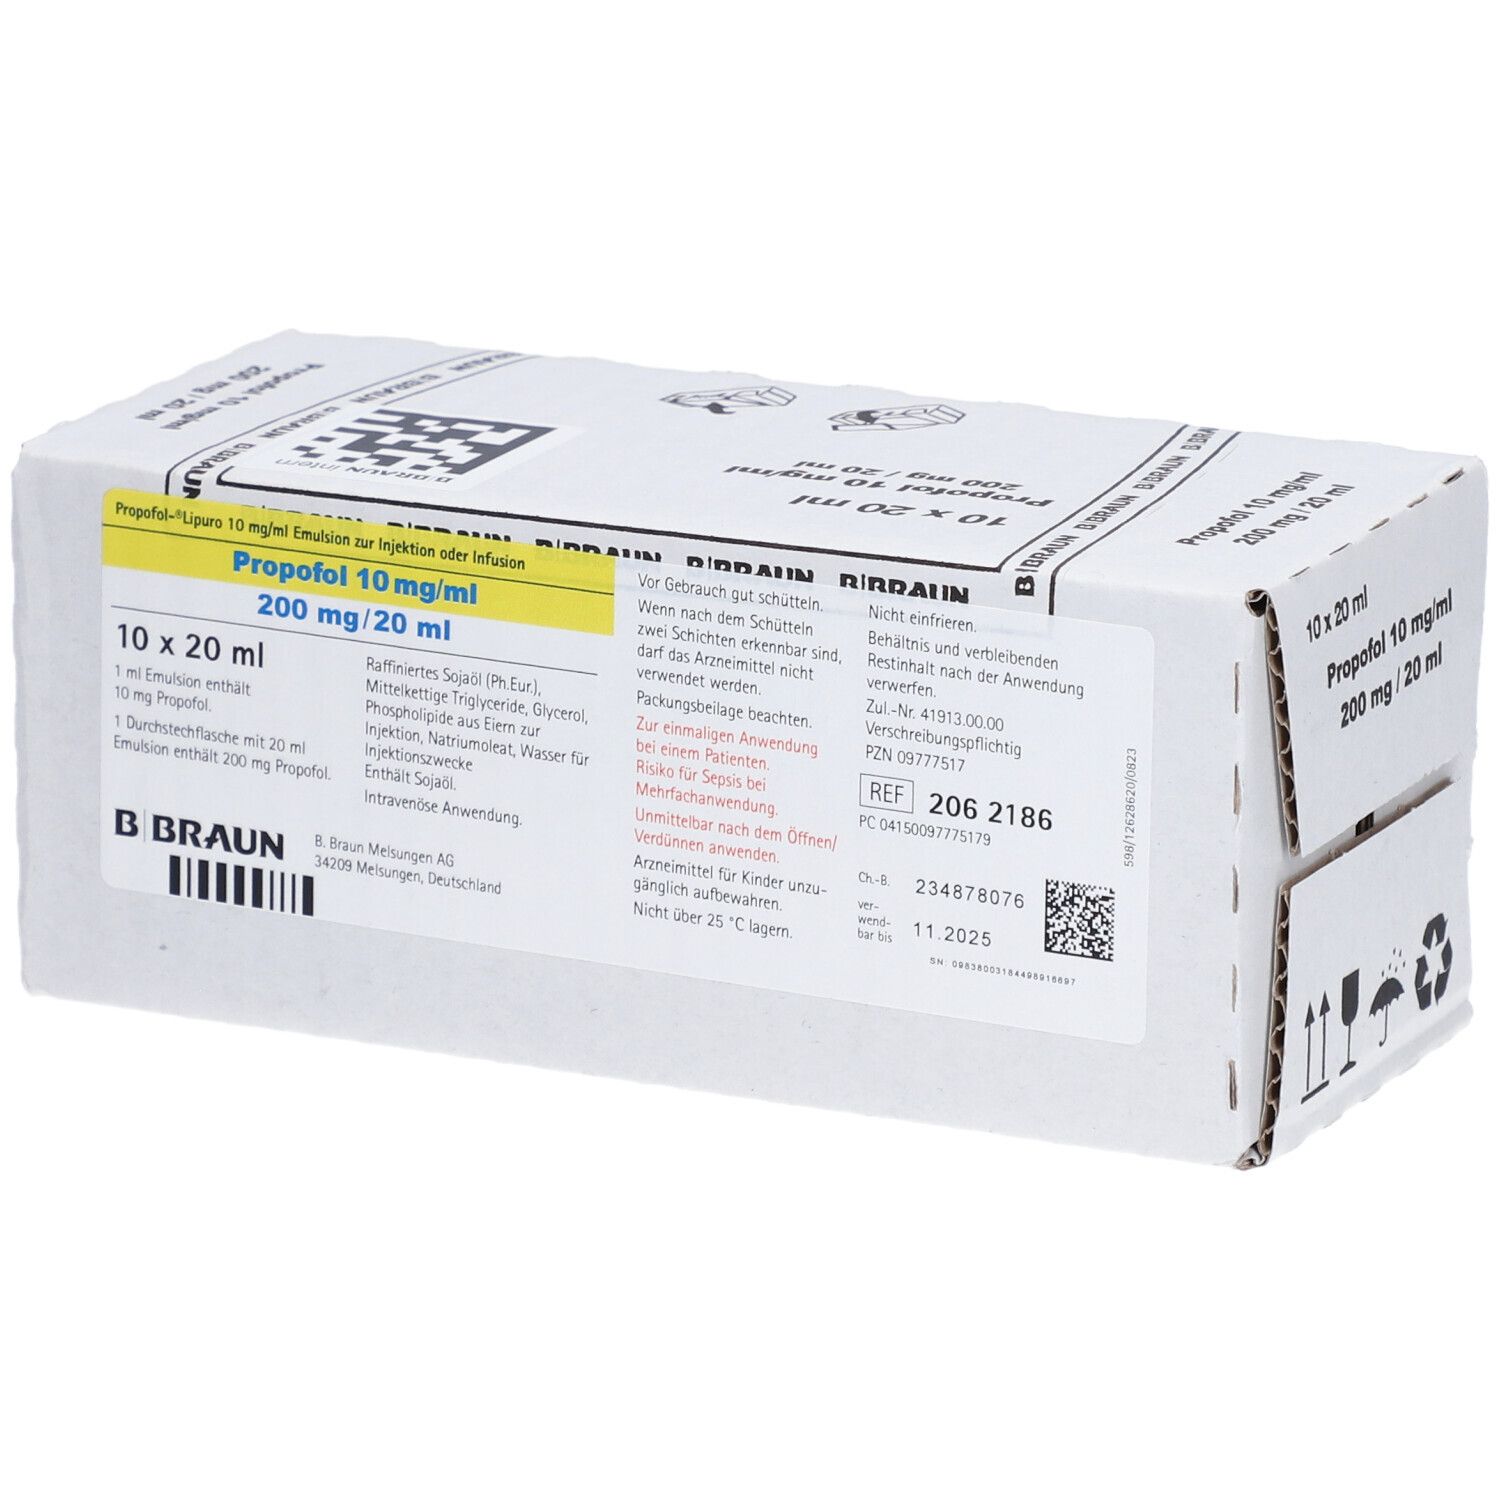 Propofol-®Lipuro 10 mg/ml